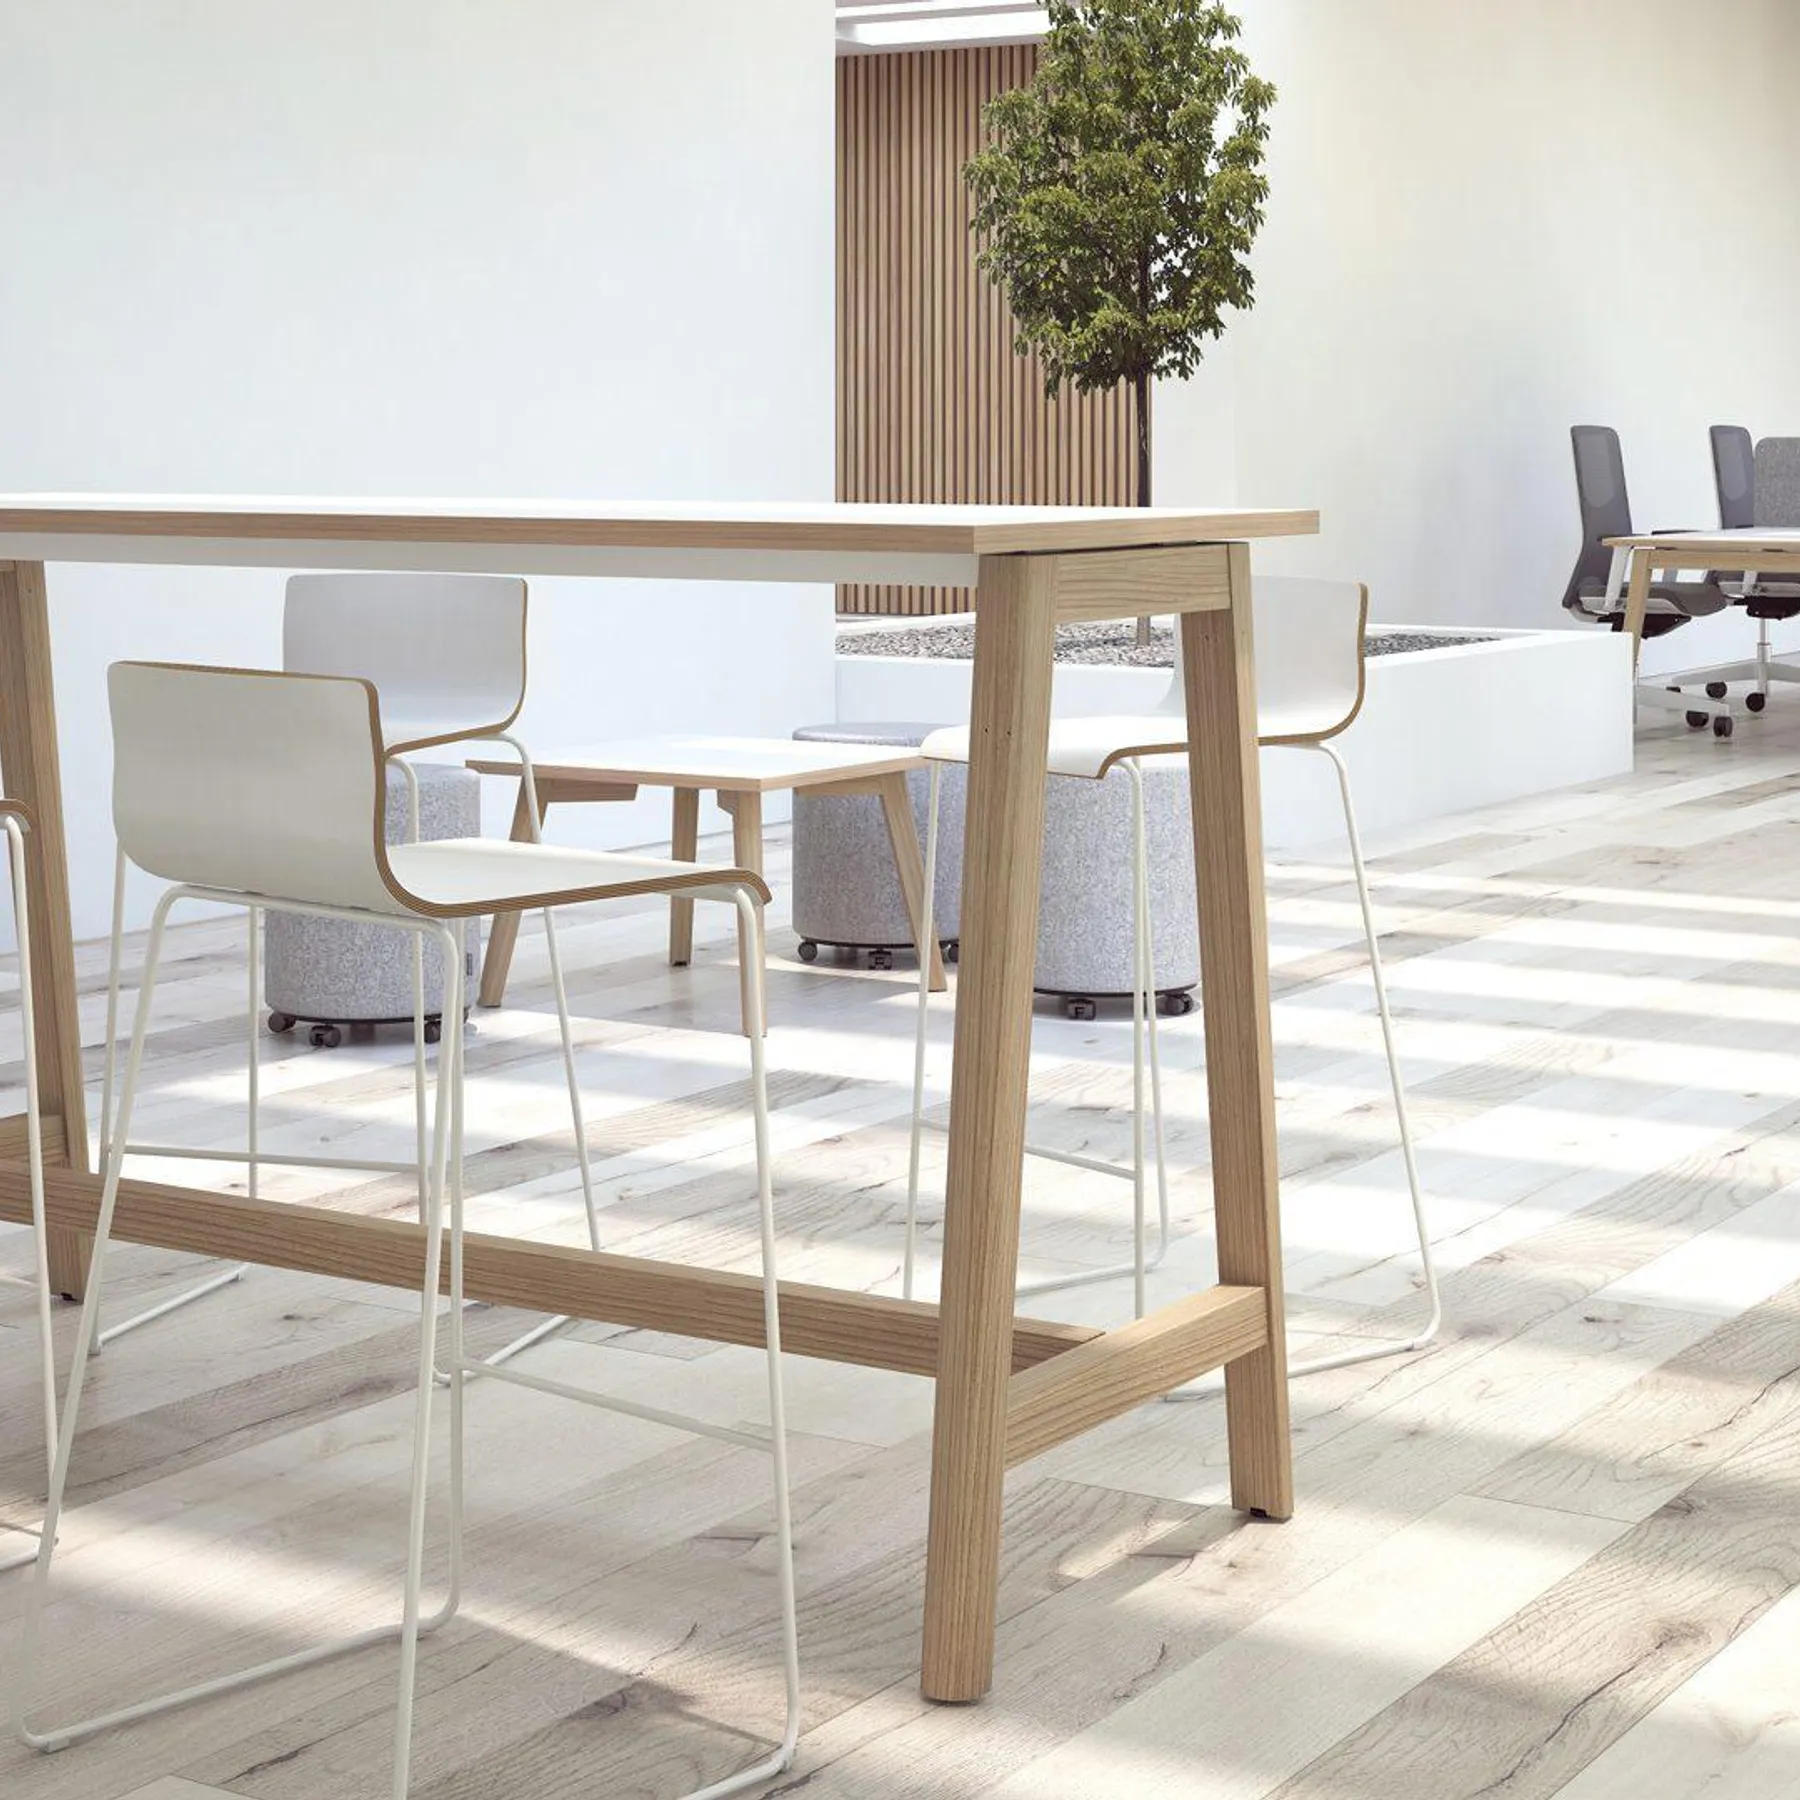 LOF direct Narbutas high tables bench desks nova wood task chairs wind 1920x1080